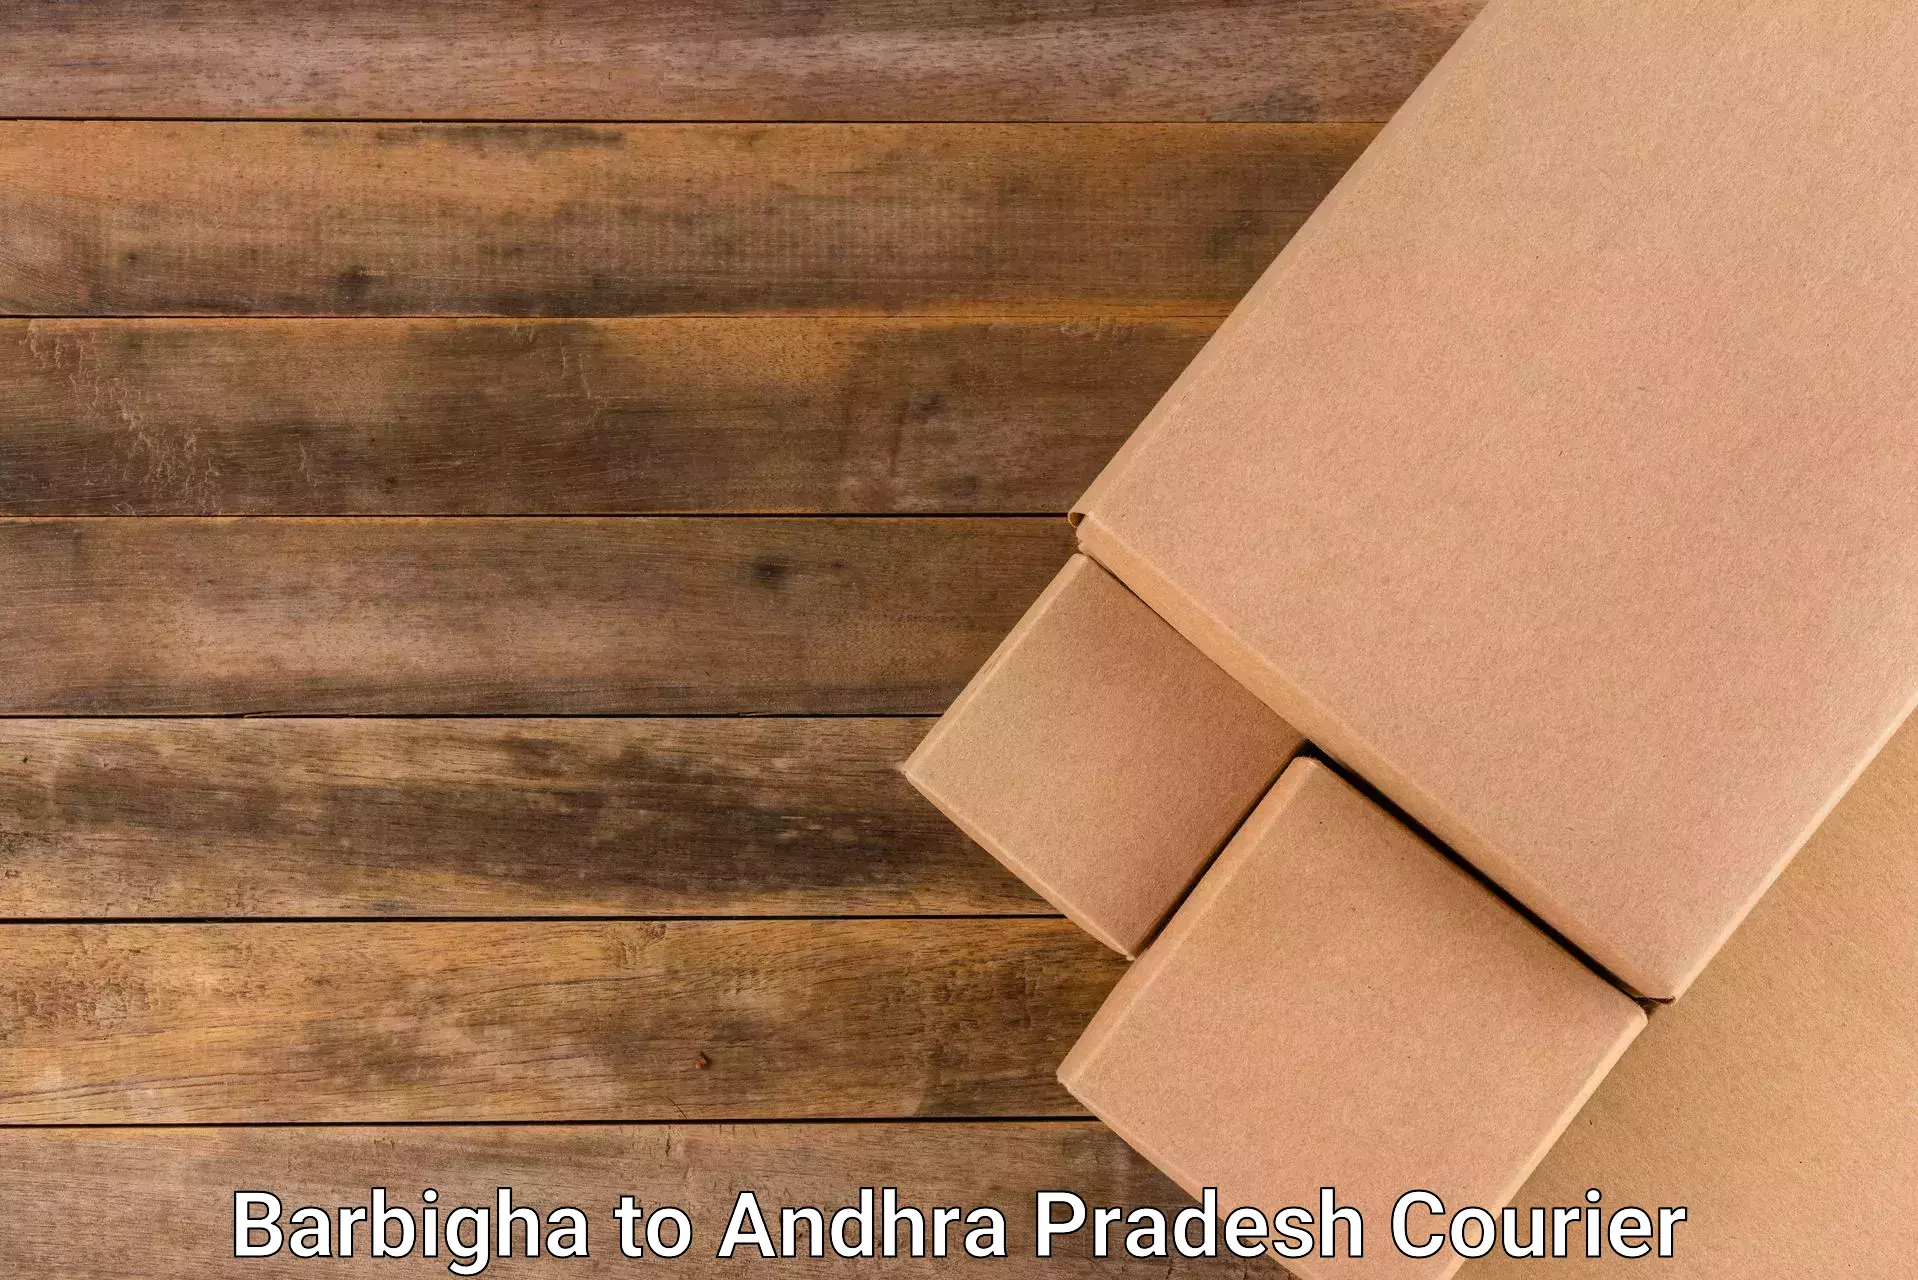 Courier service partnerships Barbigha to Andhra Pradesh